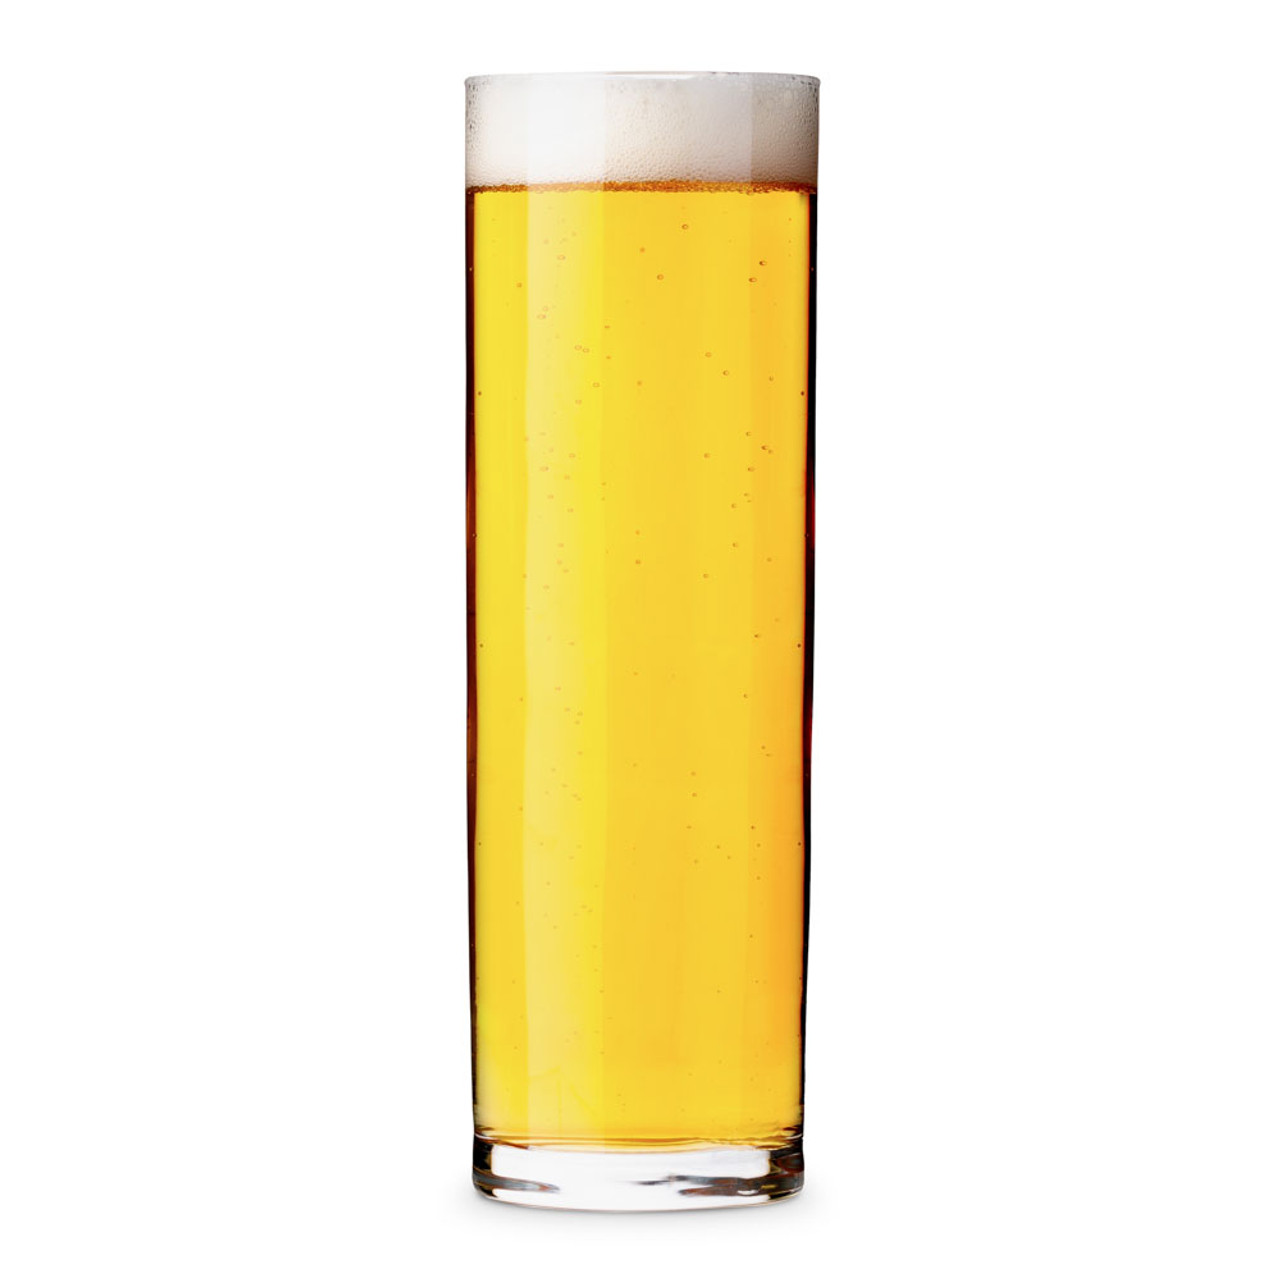 Large Spanish Beer Drinking Glasses, Set of 4